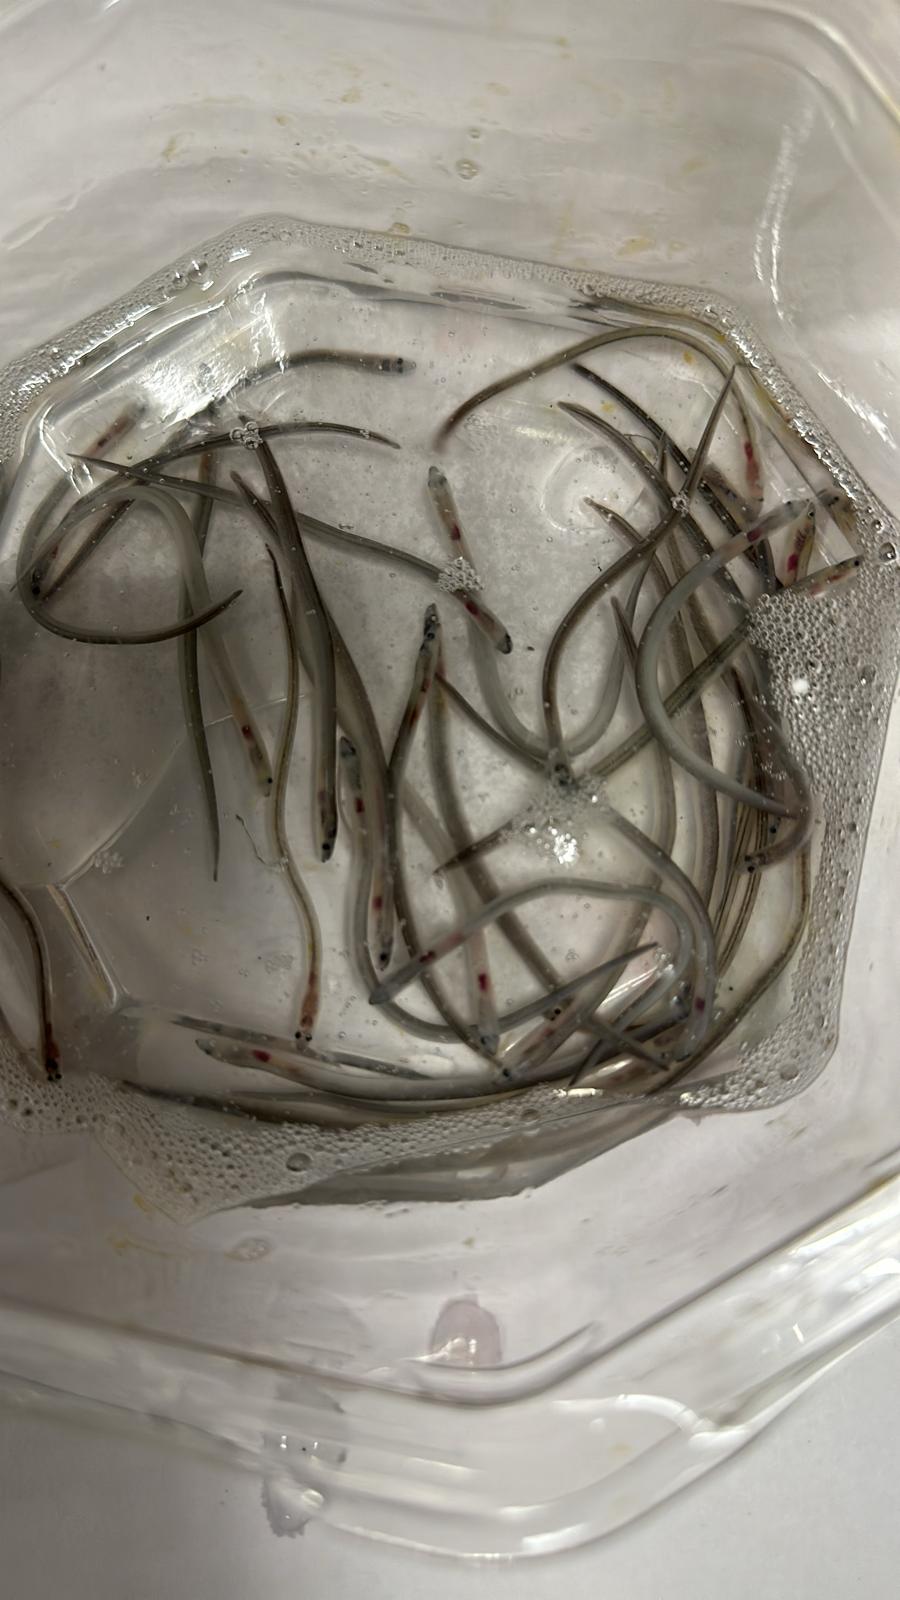 AFCD seized endangered European eel fry